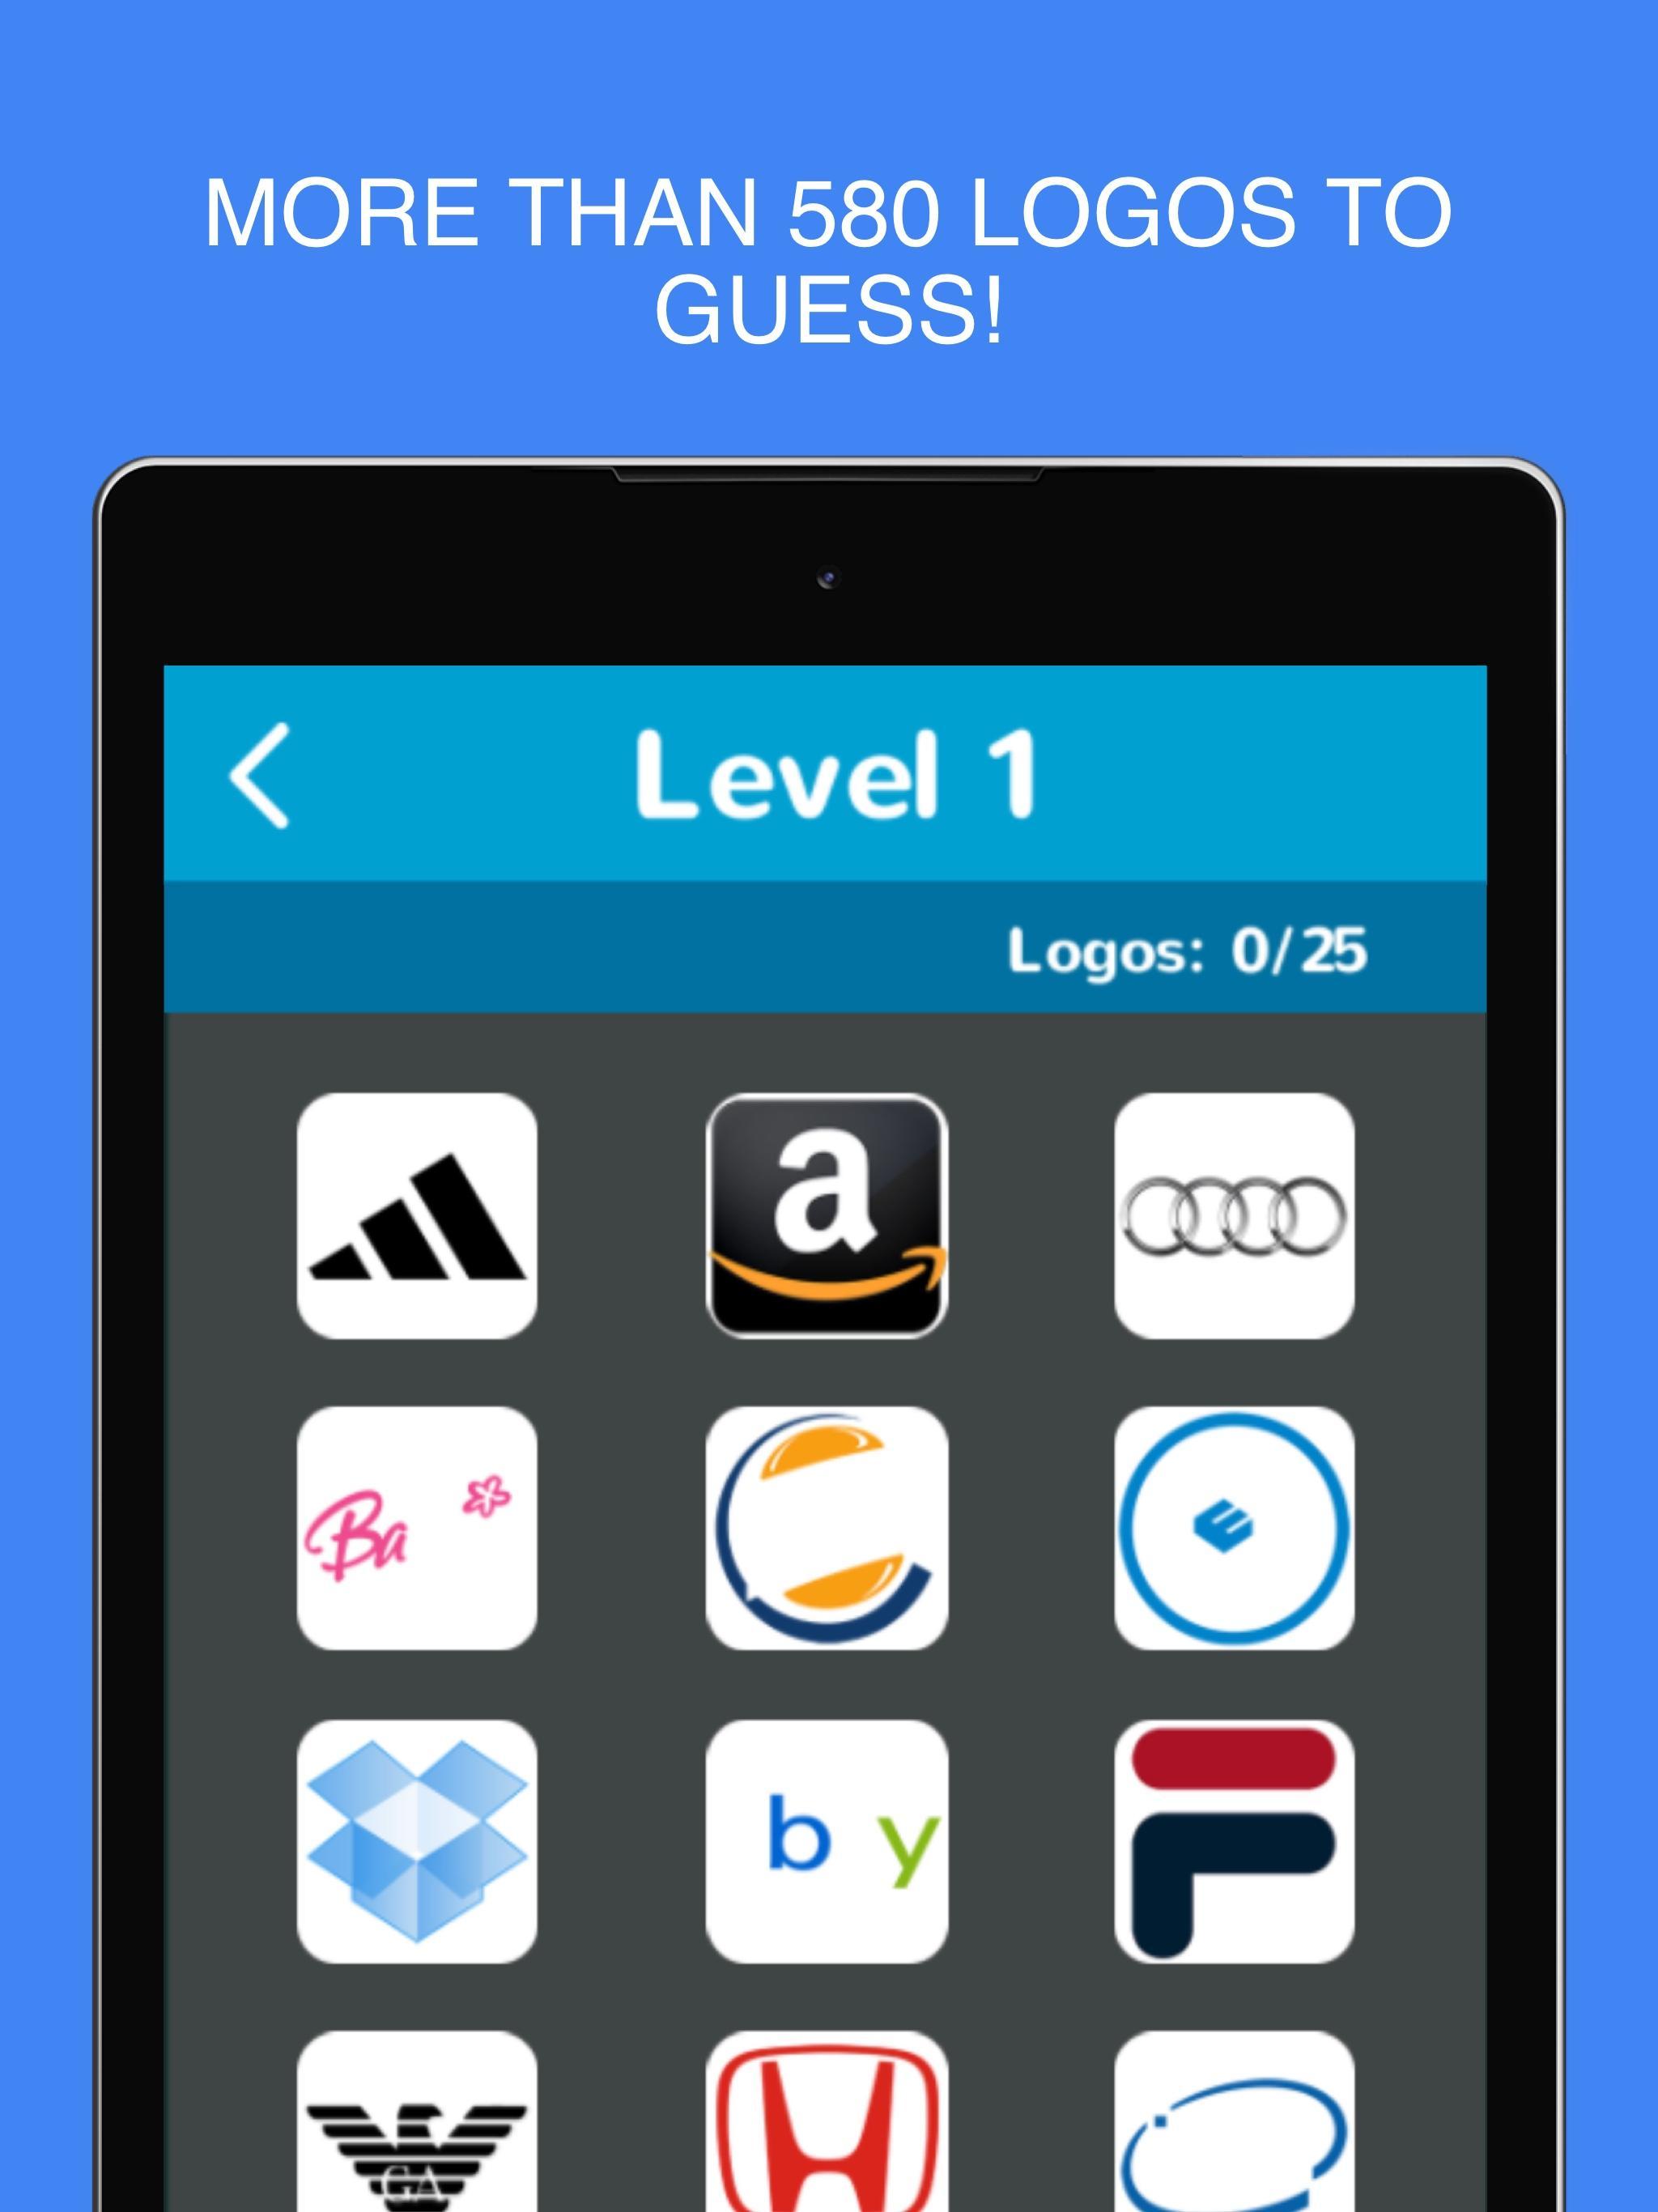 Guess The Brand: Logo Quiz Game Free 1.9.5 Screenshot 14